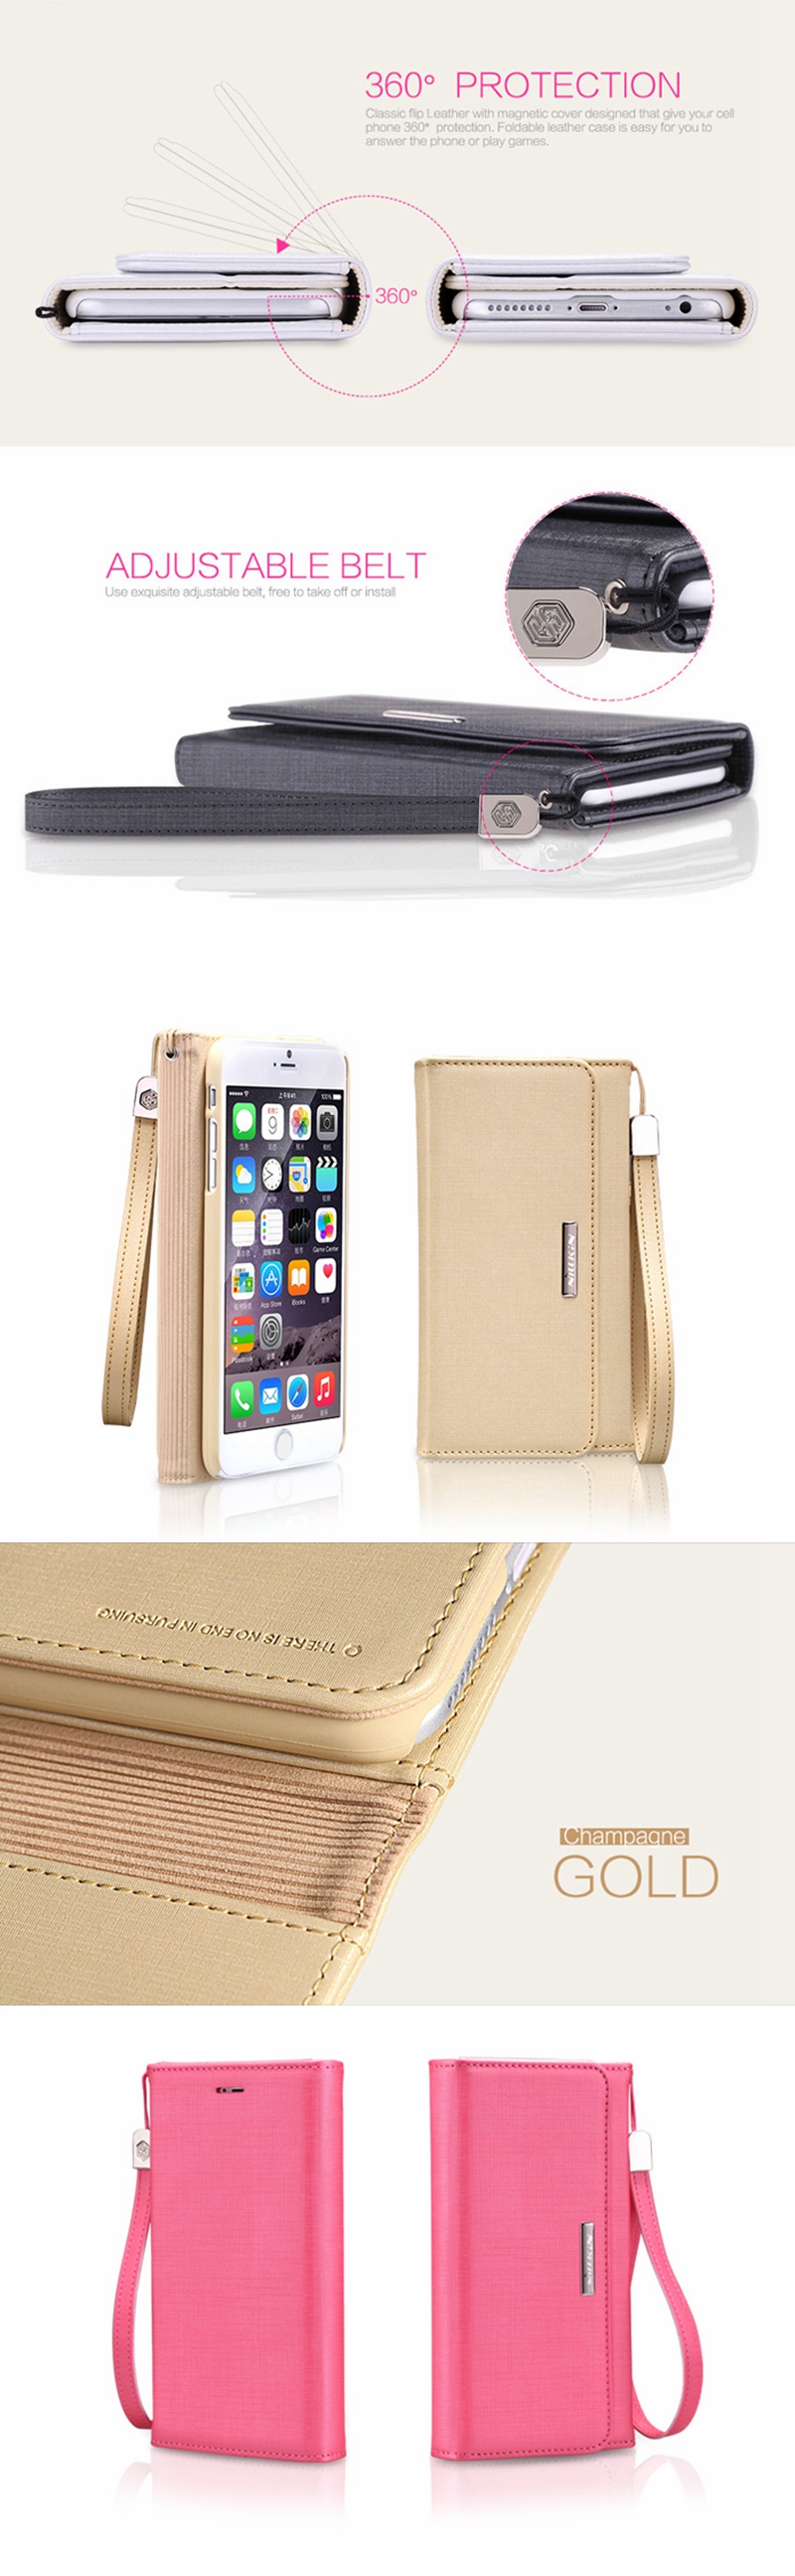 Nillkin-BAZAAR-Series-Luxury-Purse-Leather-Case-For-iPhone-6-Plus-6S-Plus-55-Inch-986676